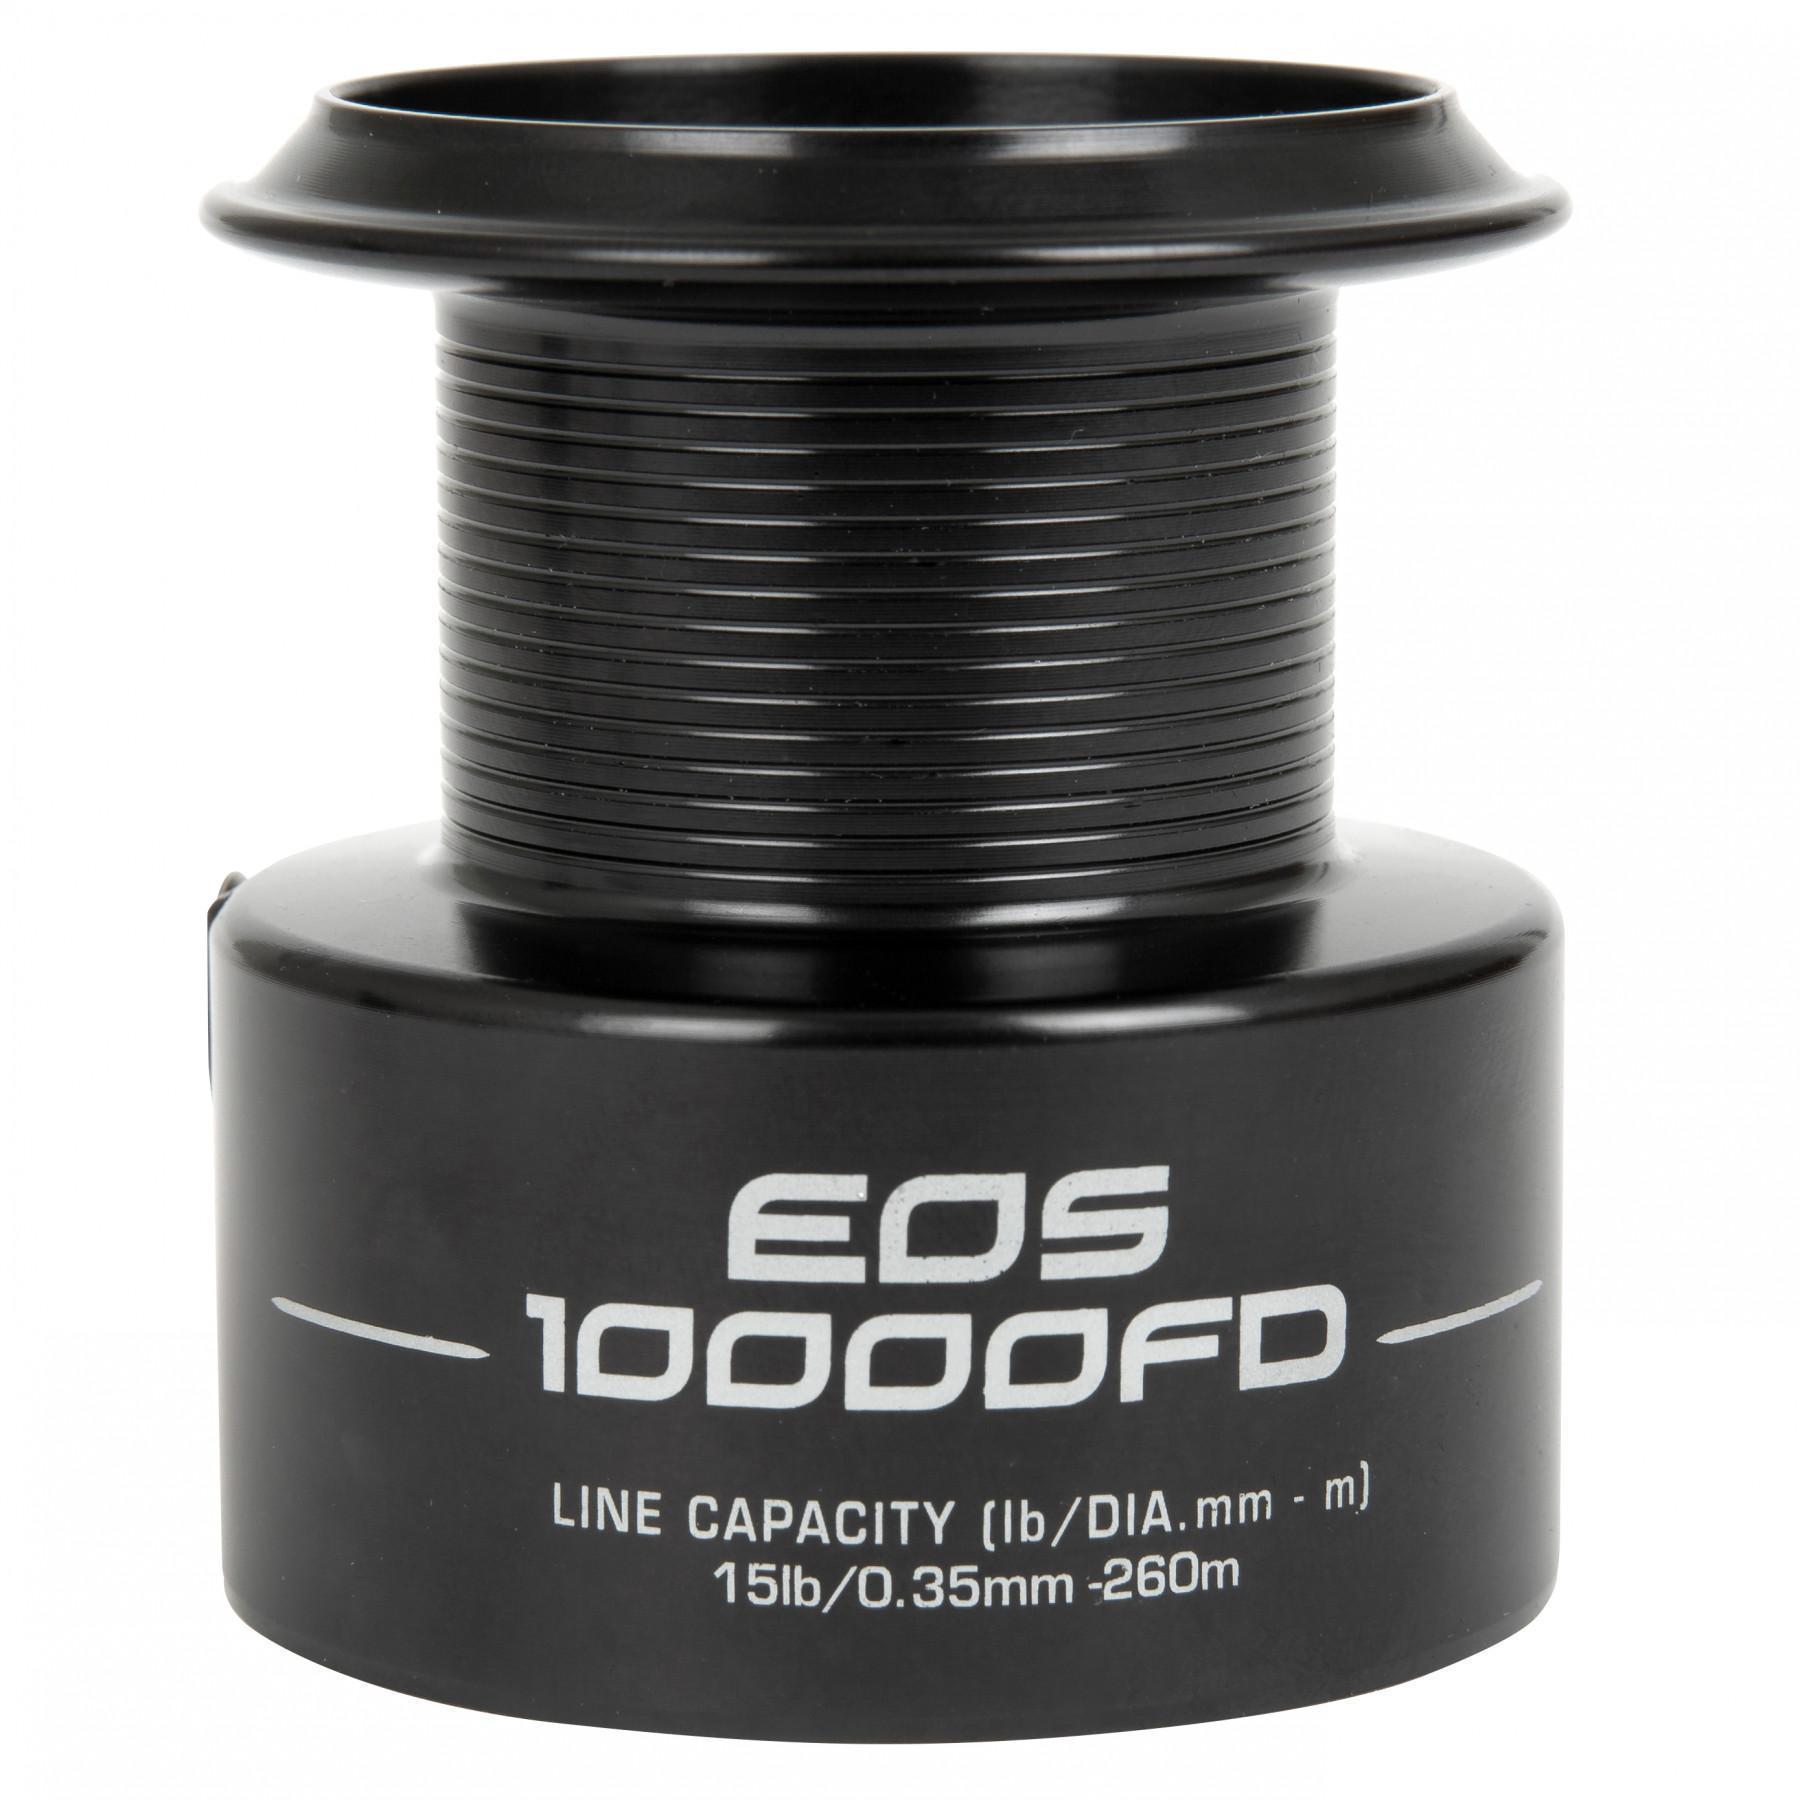 eos spare spool for reel Fox 10000 FD